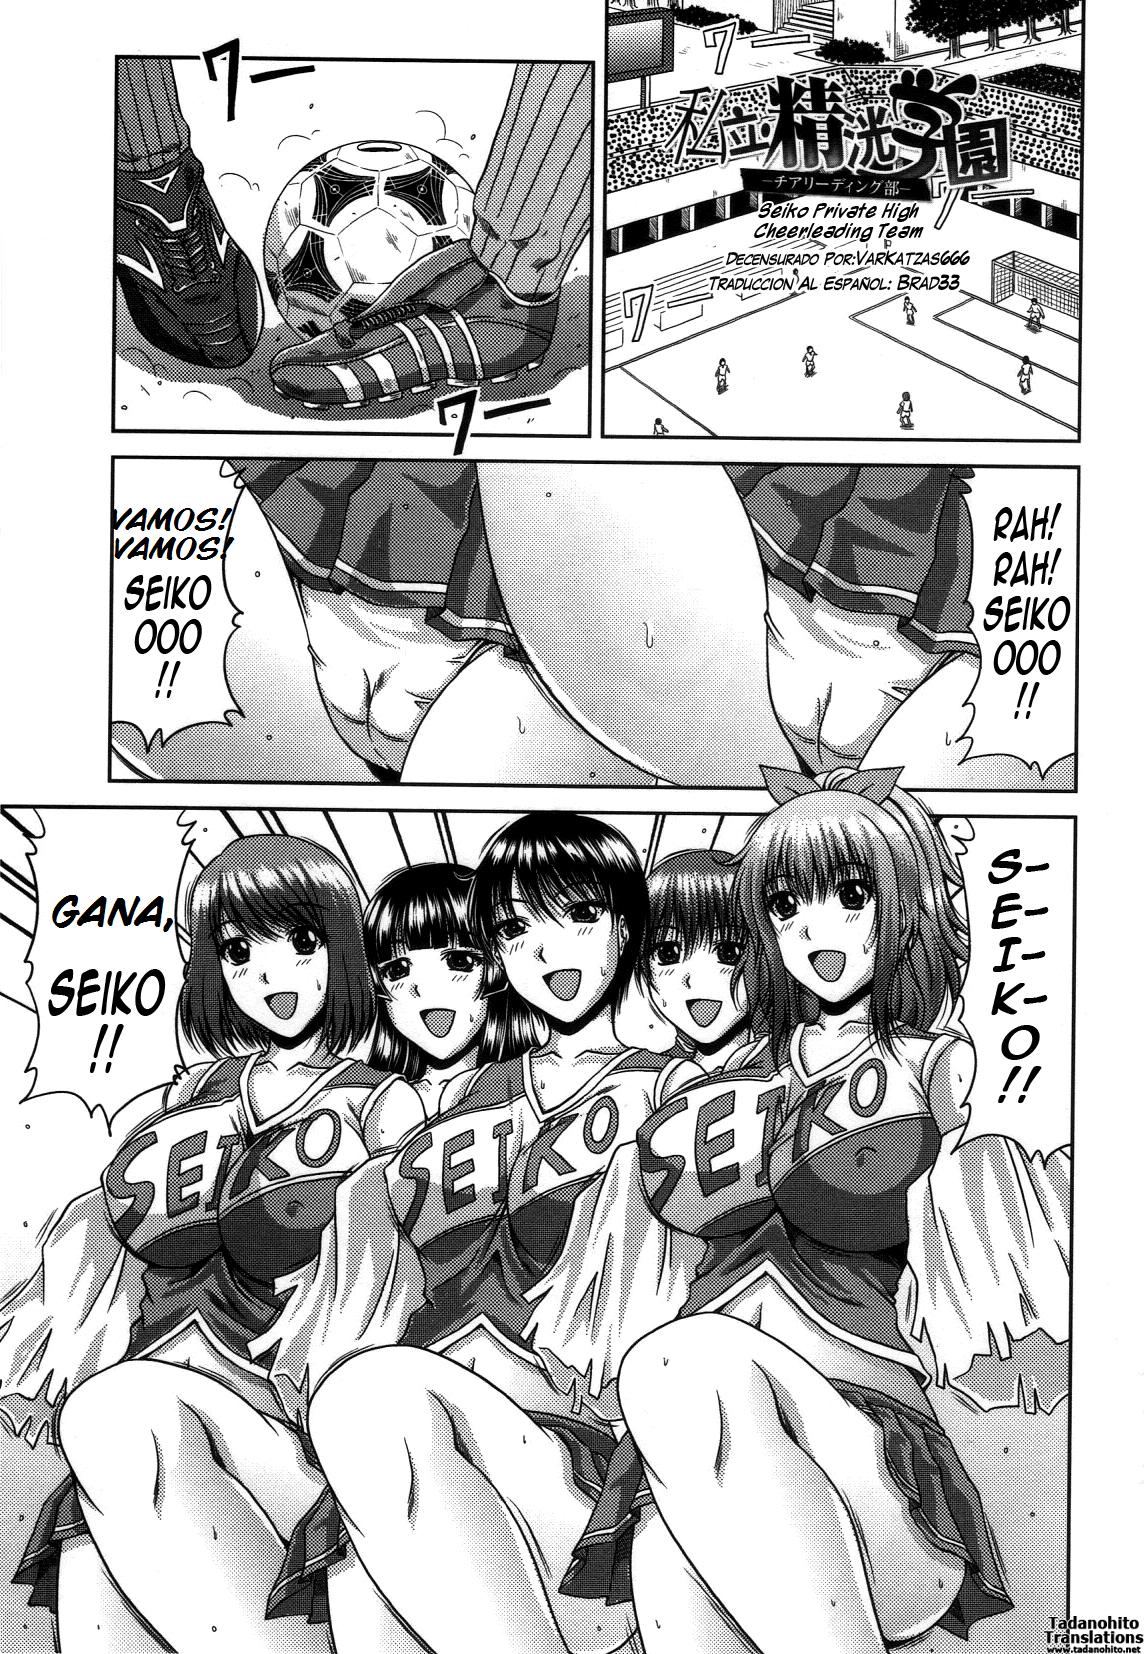 Seiko Private High Cheerleading Team (Sin Censura) Chapter-1 - 0